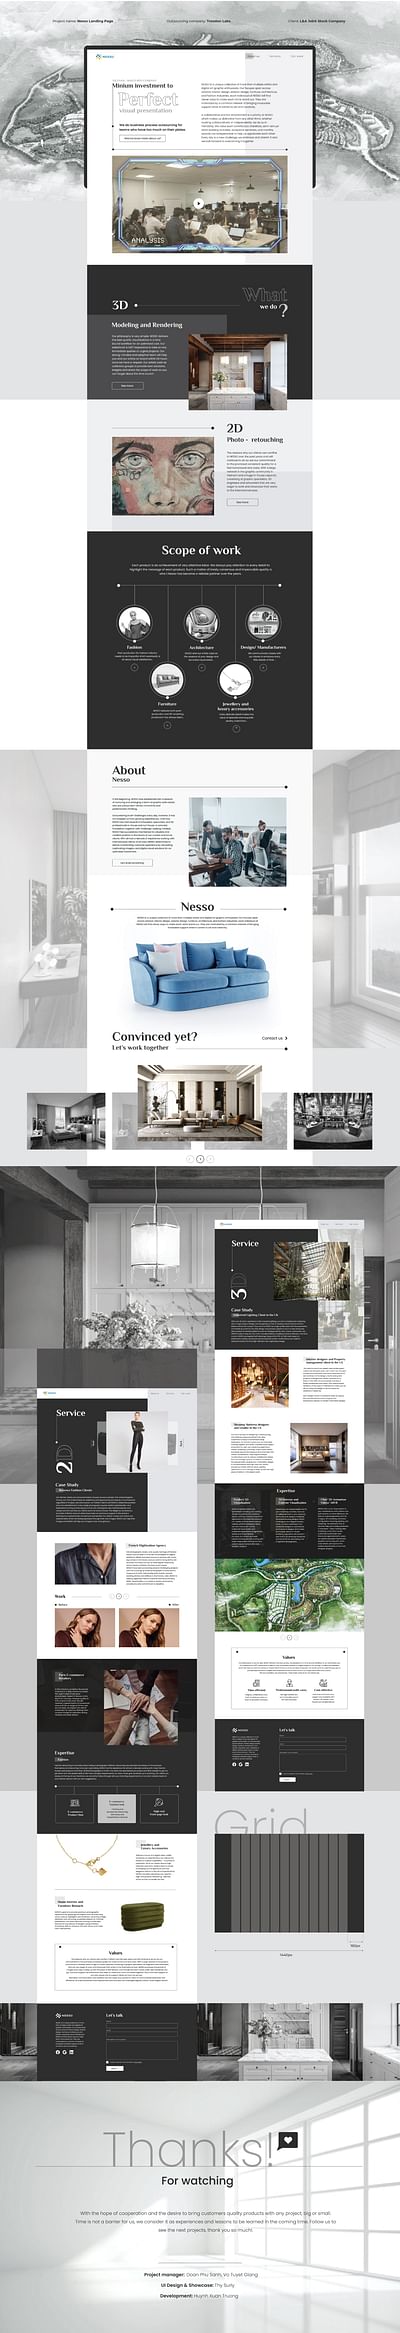 NESSO Landing Page | Web Design - Website Creation